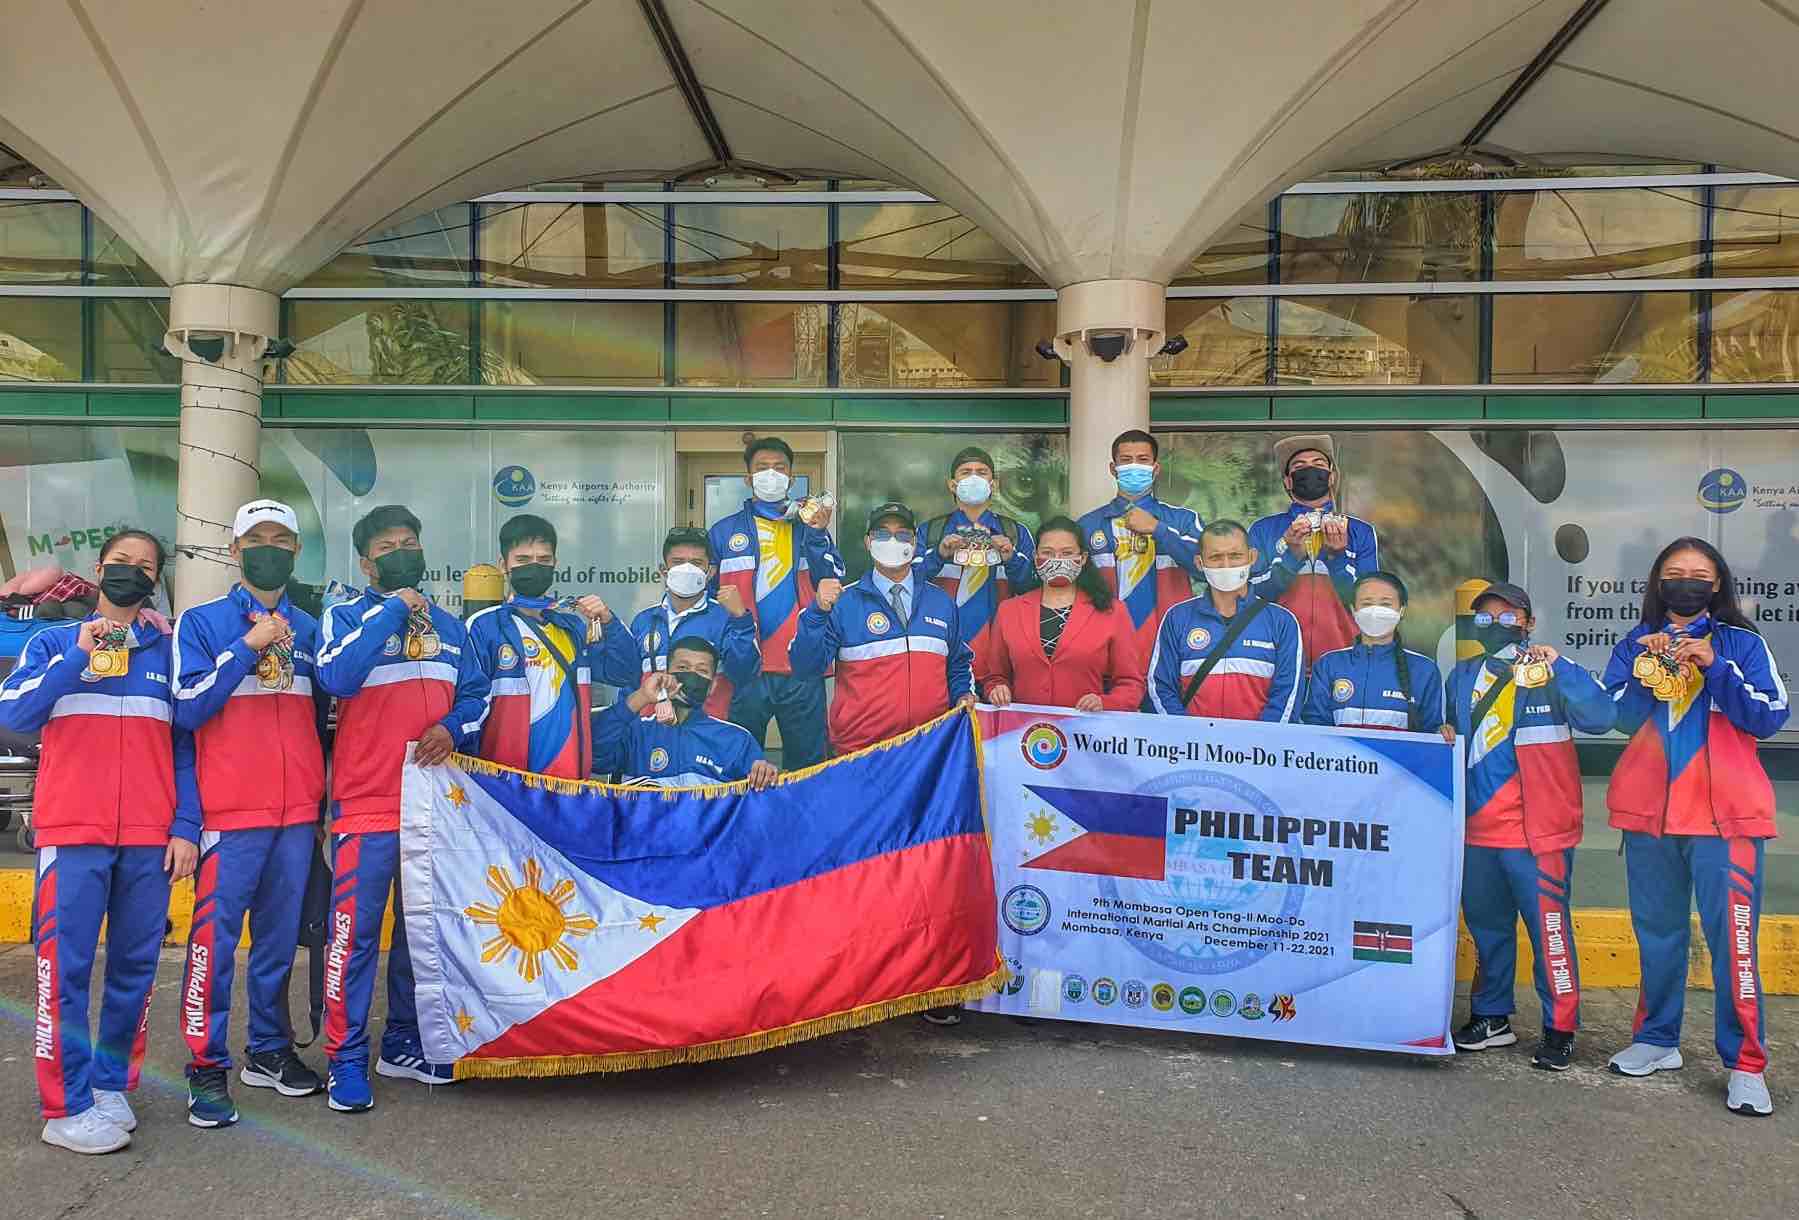 Philippines' martial arts team Kenya Mombasa 